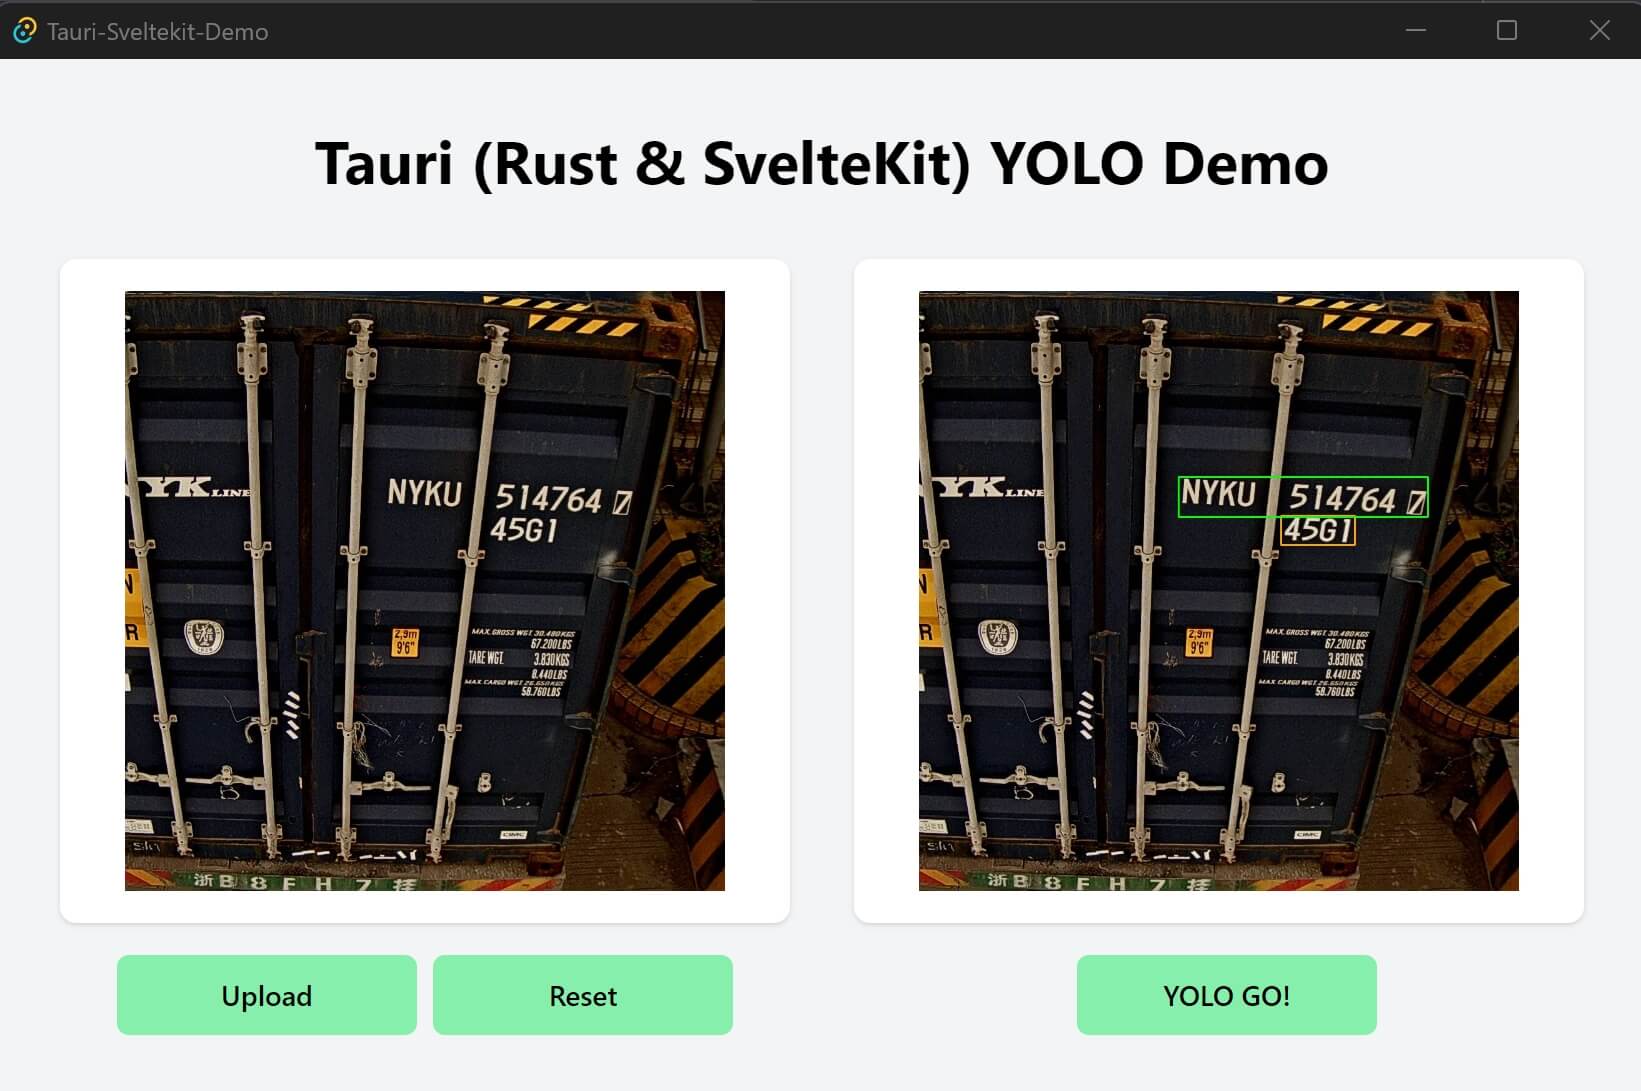 Tauri YOLO App